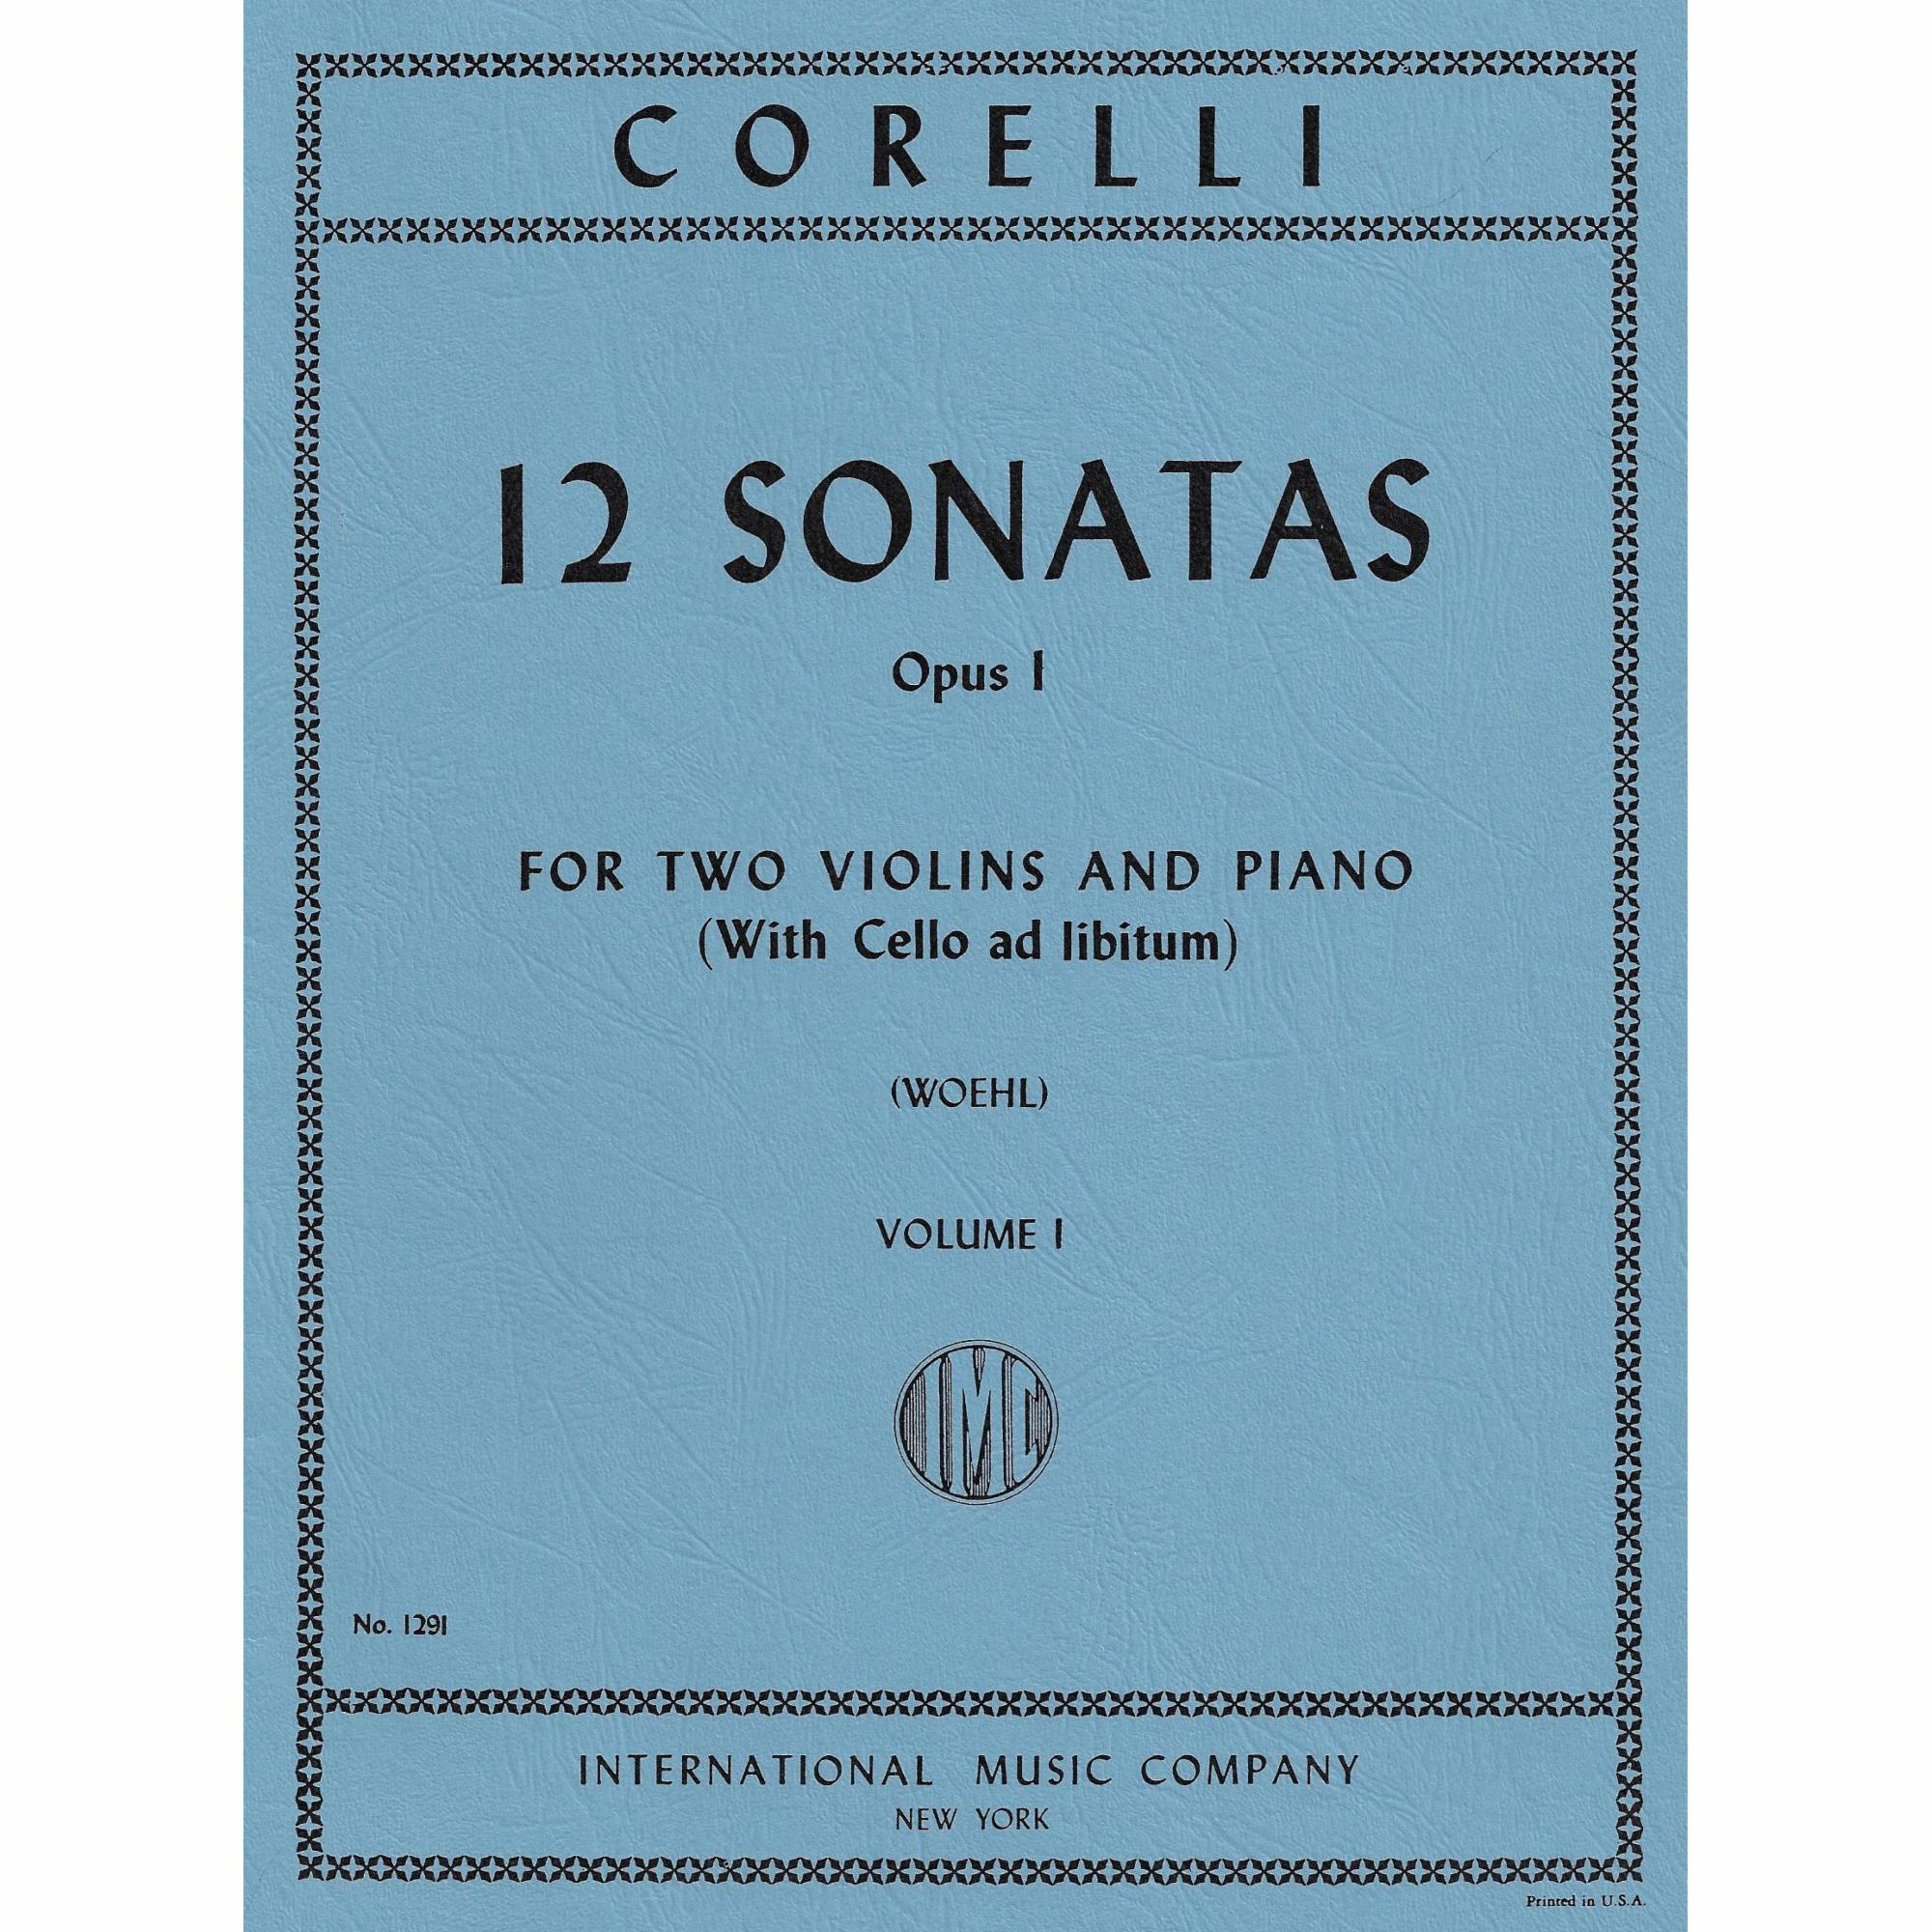 Corelli -- 12 Sonatas, Op. 1, Vols. I-IV for Two Violins and Piano